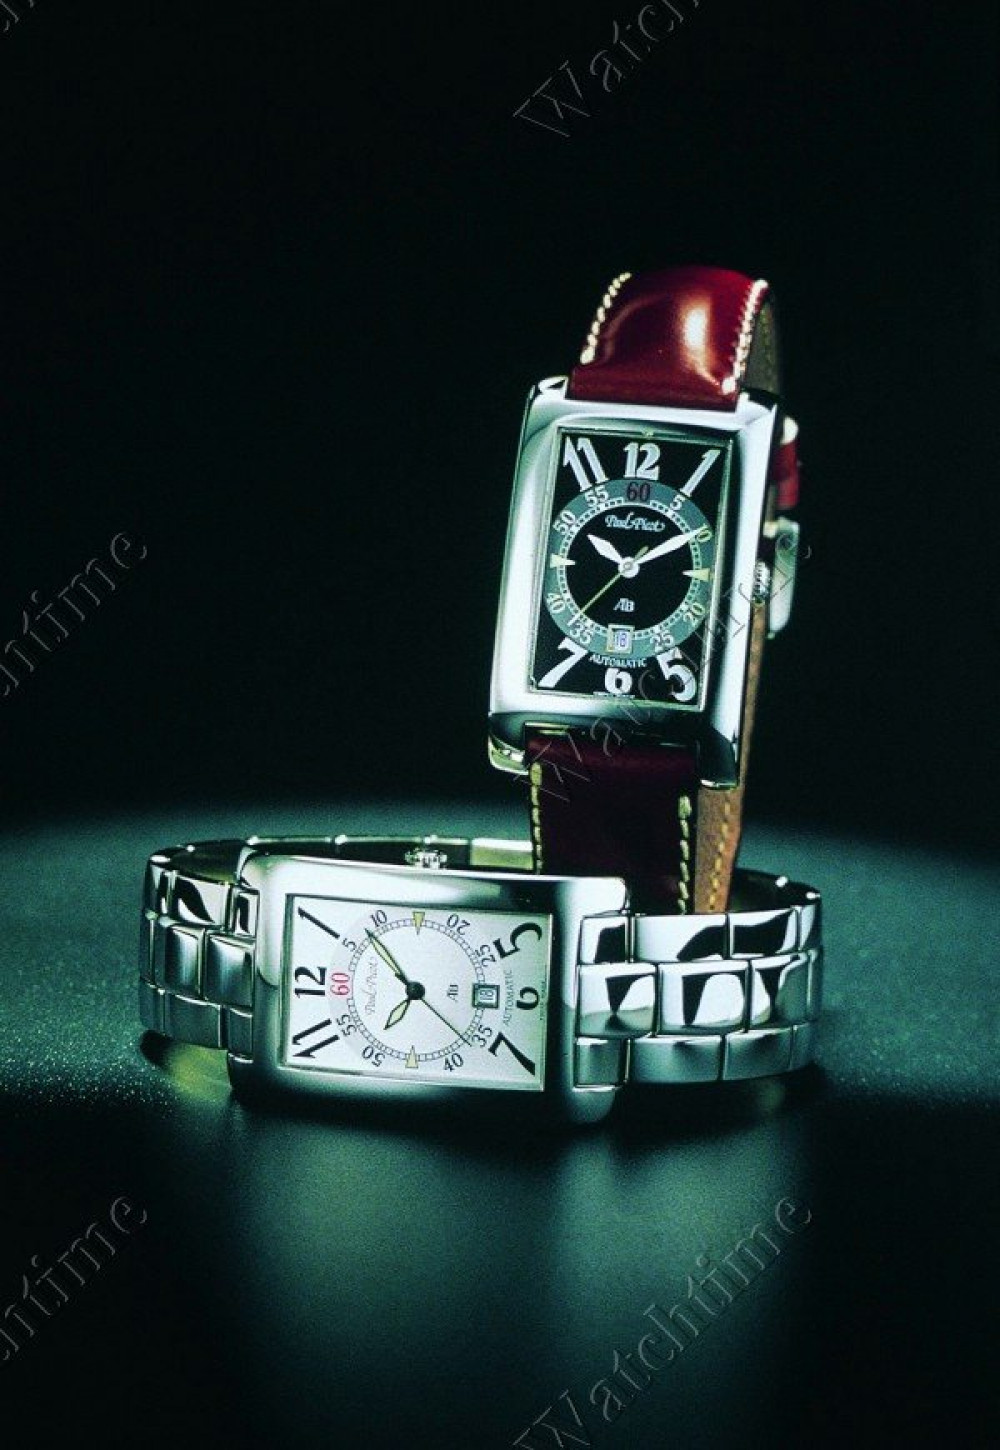 Zegarek firmy Paul Picot, model American Bridge